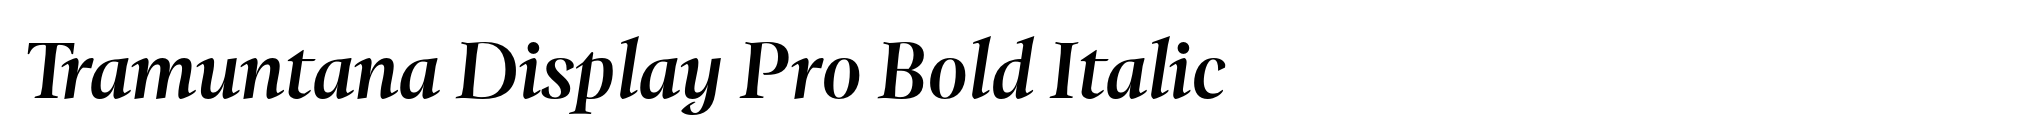 Tramuntana Display Pro Bold Italic image